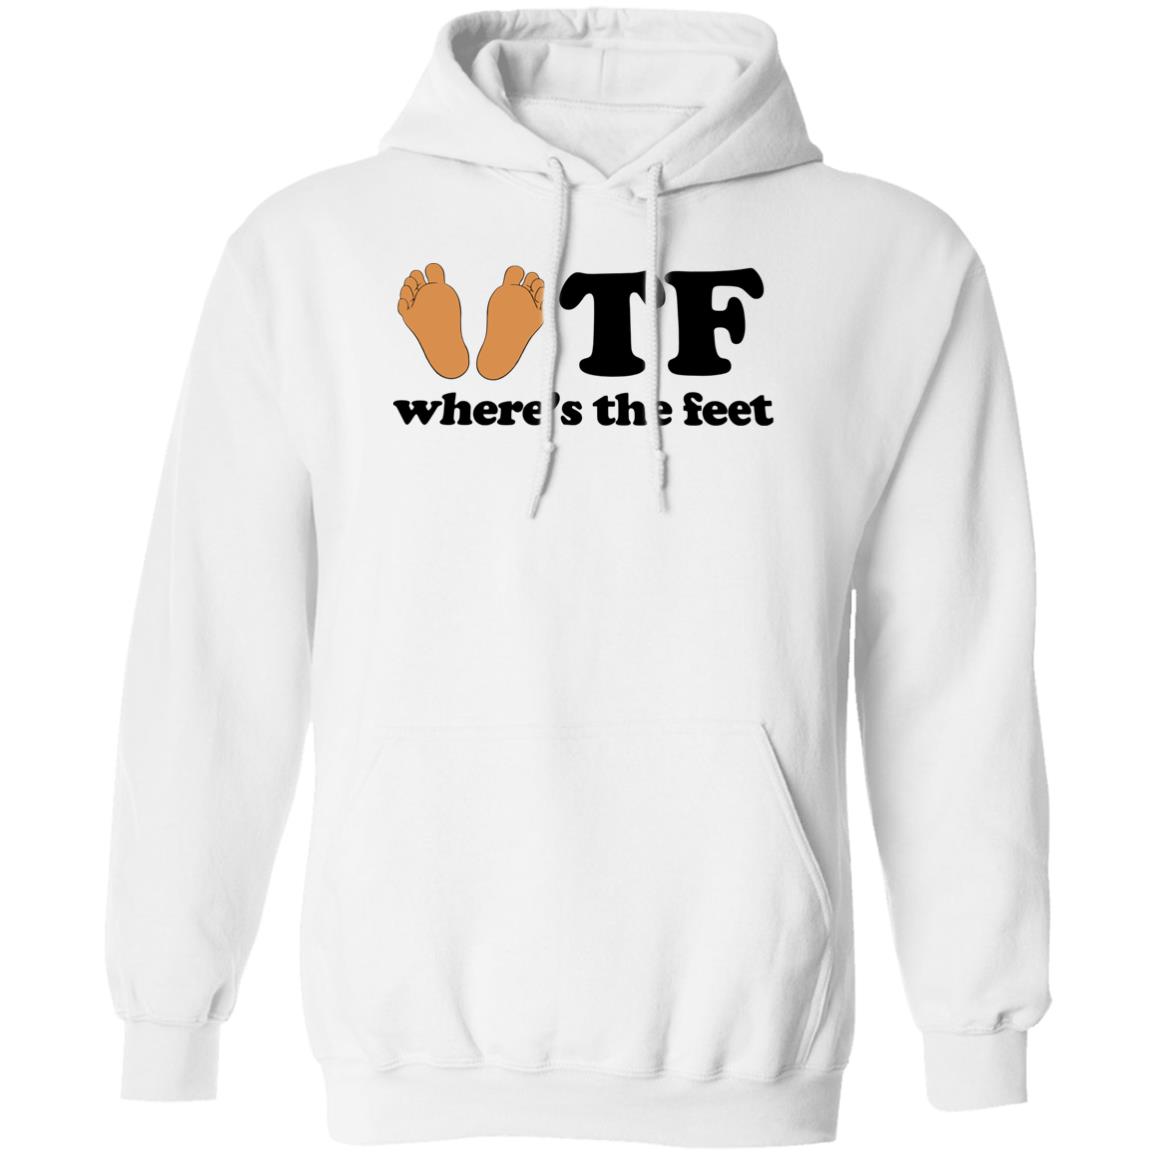 Wtf Where’s The Feet Shirt 1